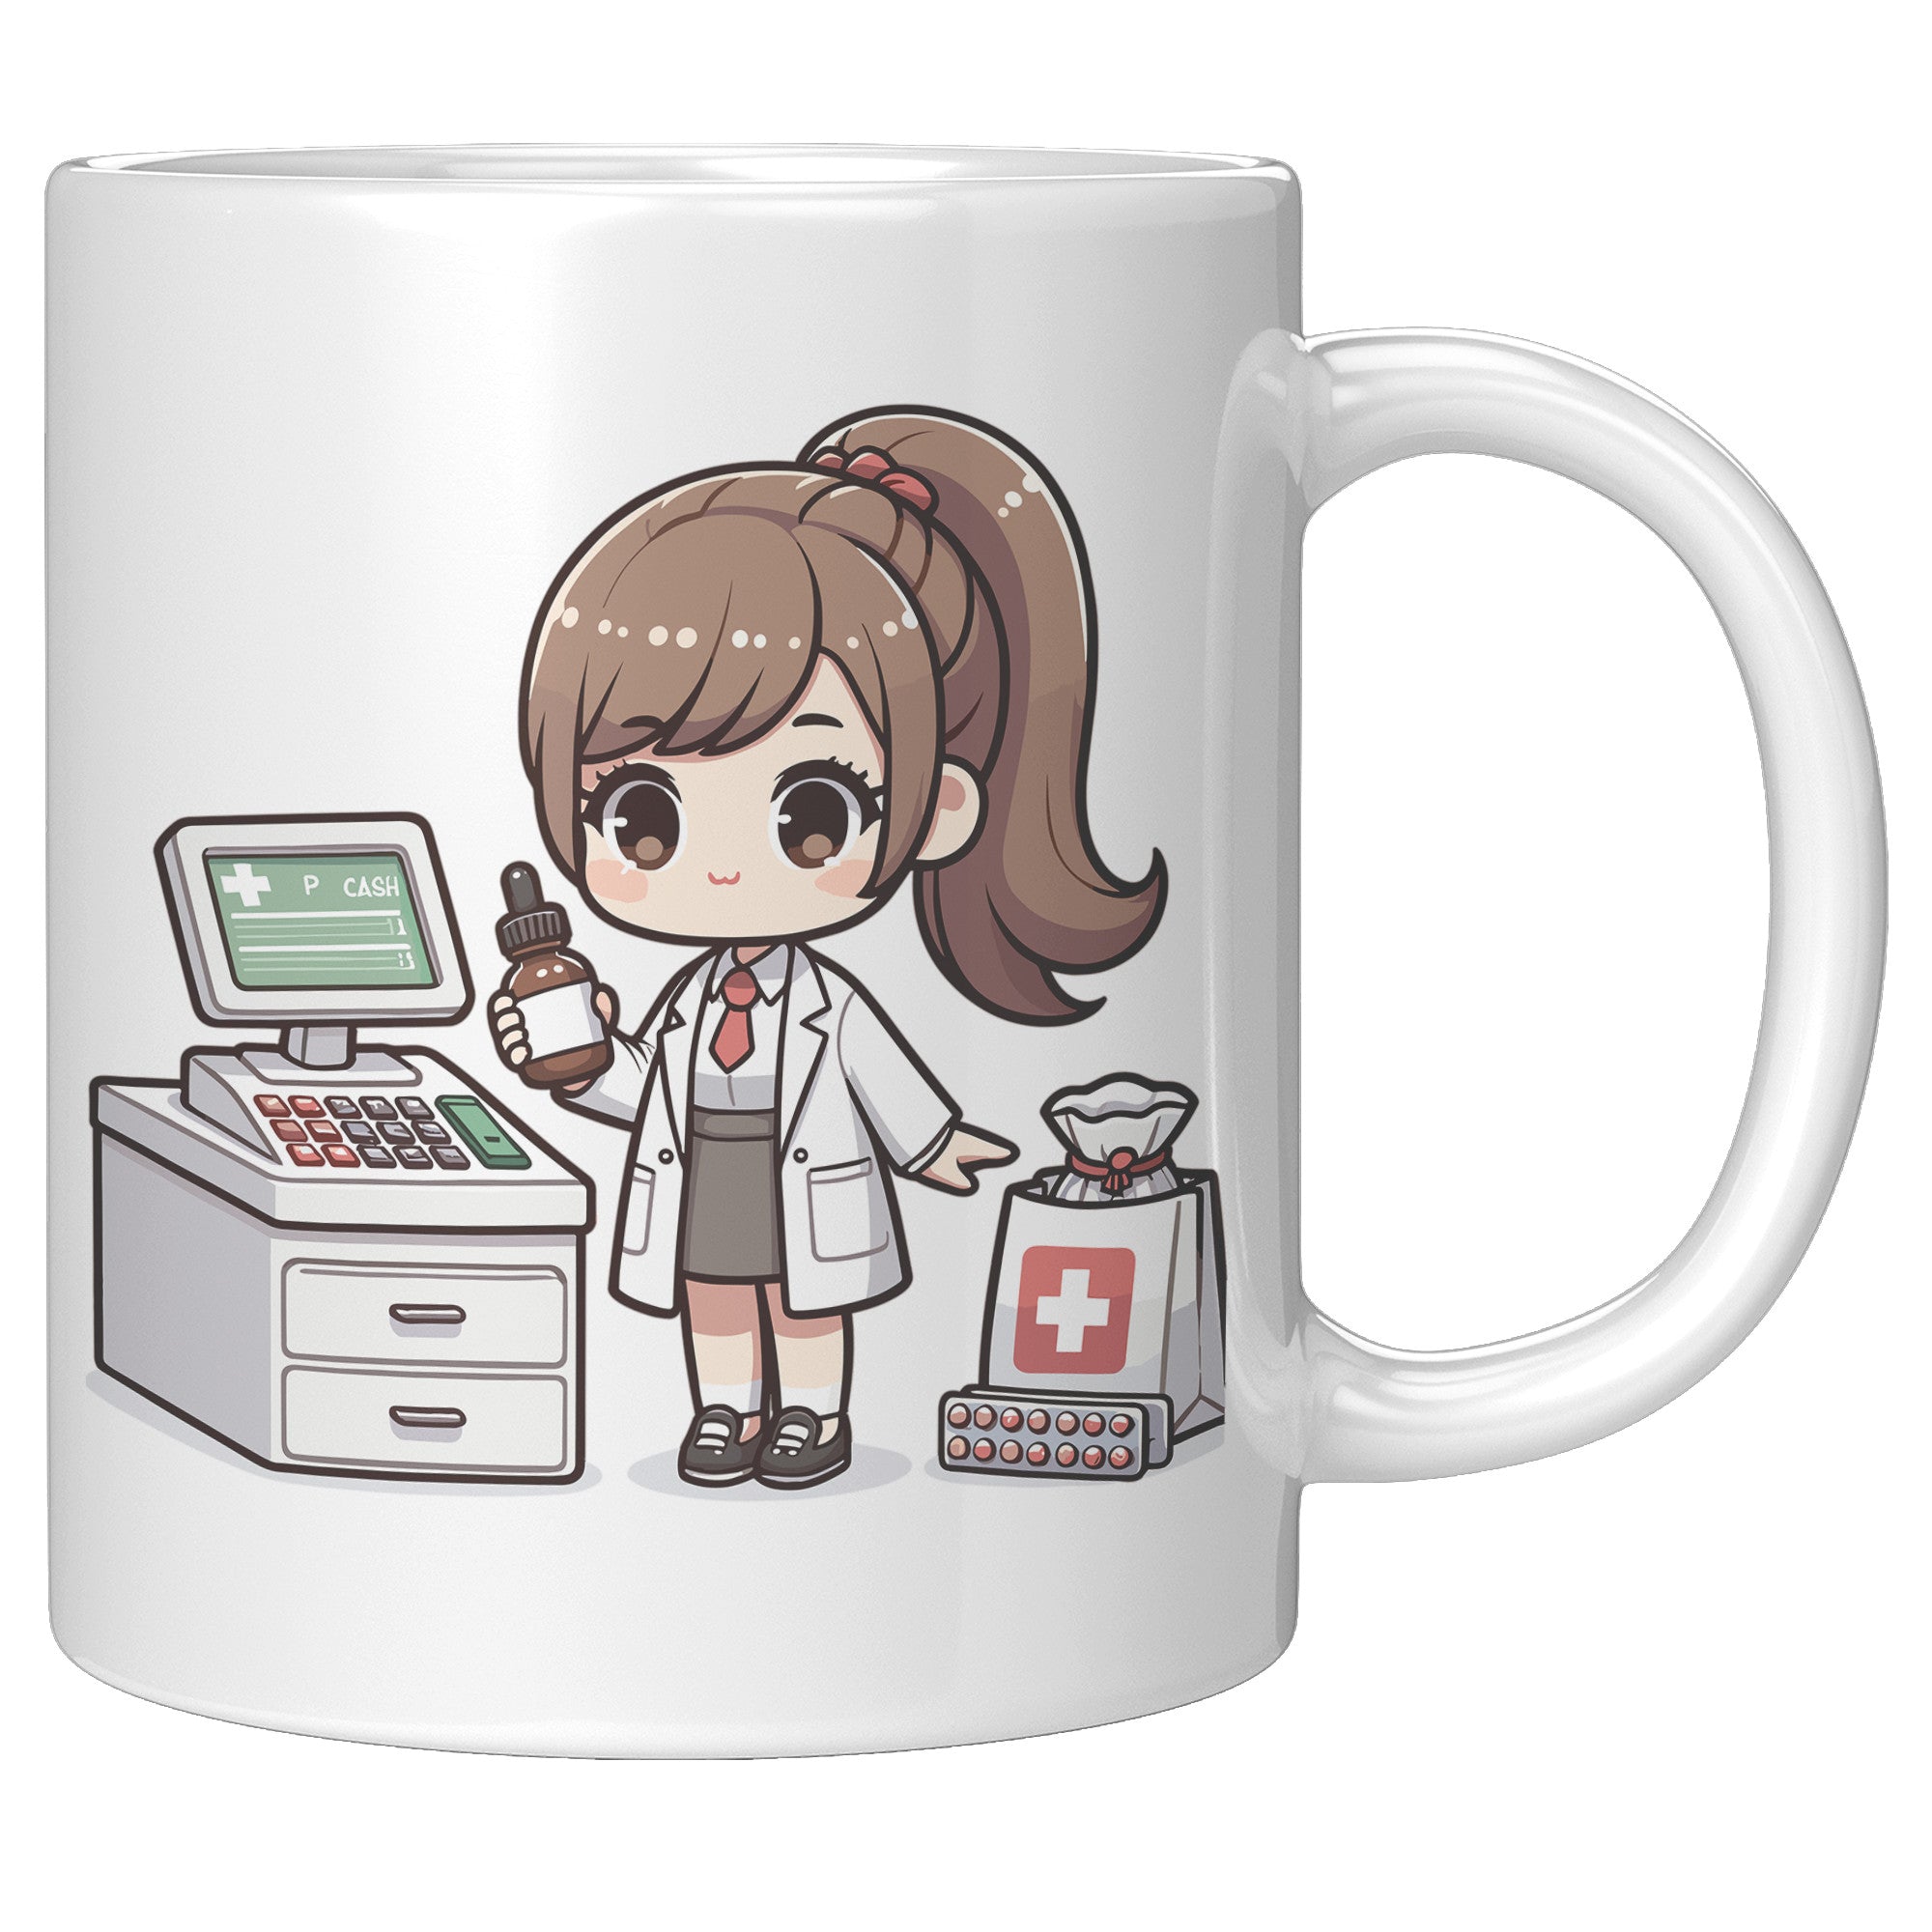 11oz Custom Pharmacist Character Coffee Mug - Cute Pharmacy Cartoon Cup - Perfect Gift for Pharmacists & Pharmacy Techs - Fun Prescription for Your Coffee! - A